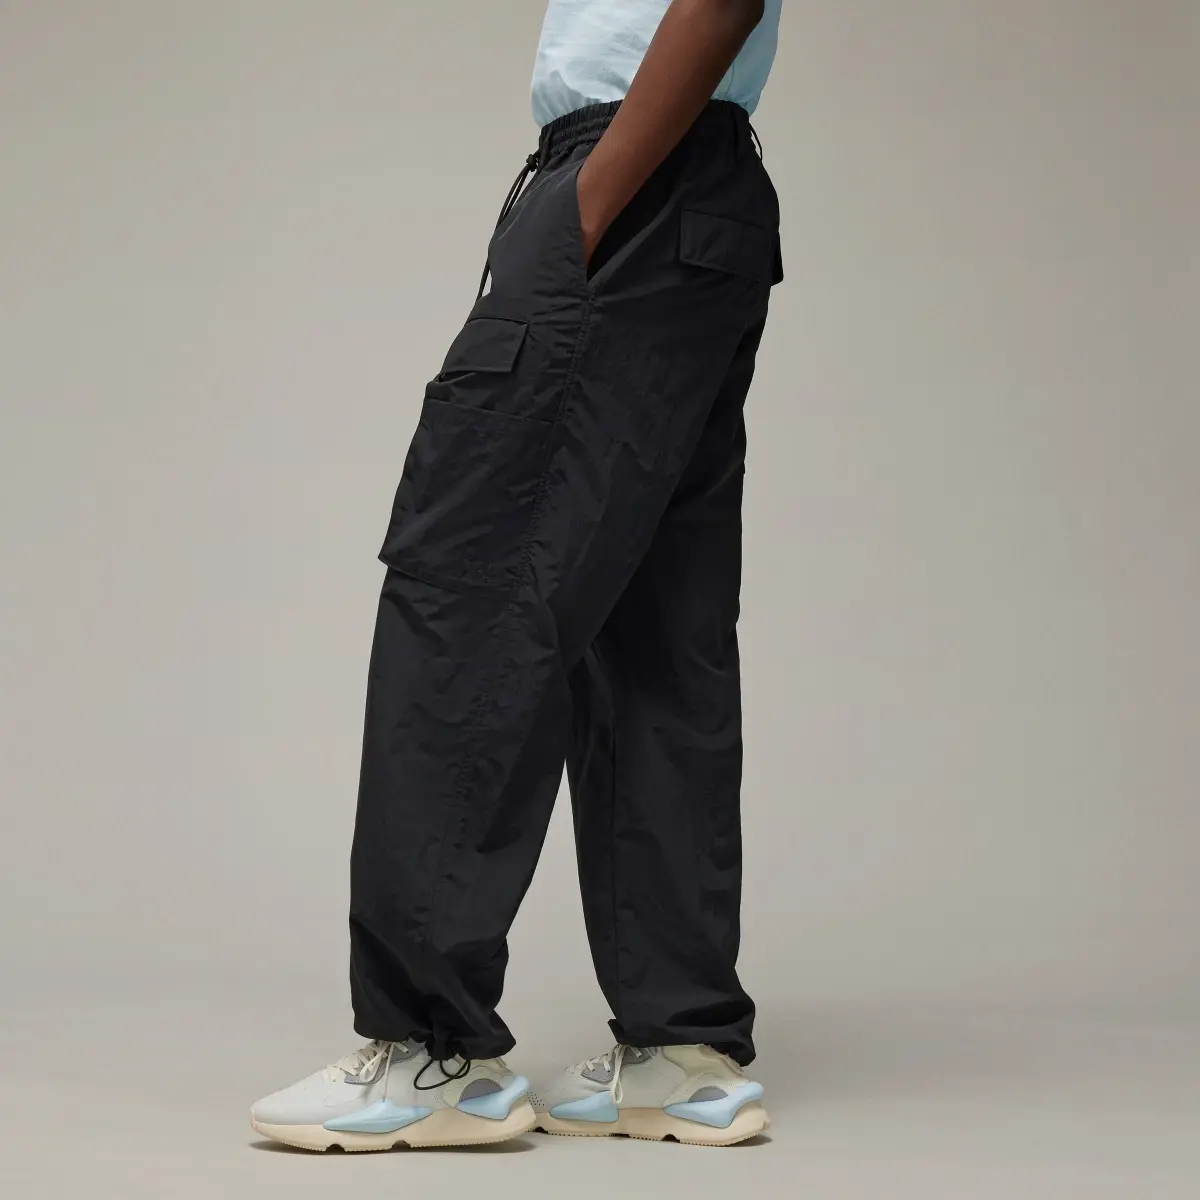 Adidas Y-3 Crinkle Nylon Pants. 2